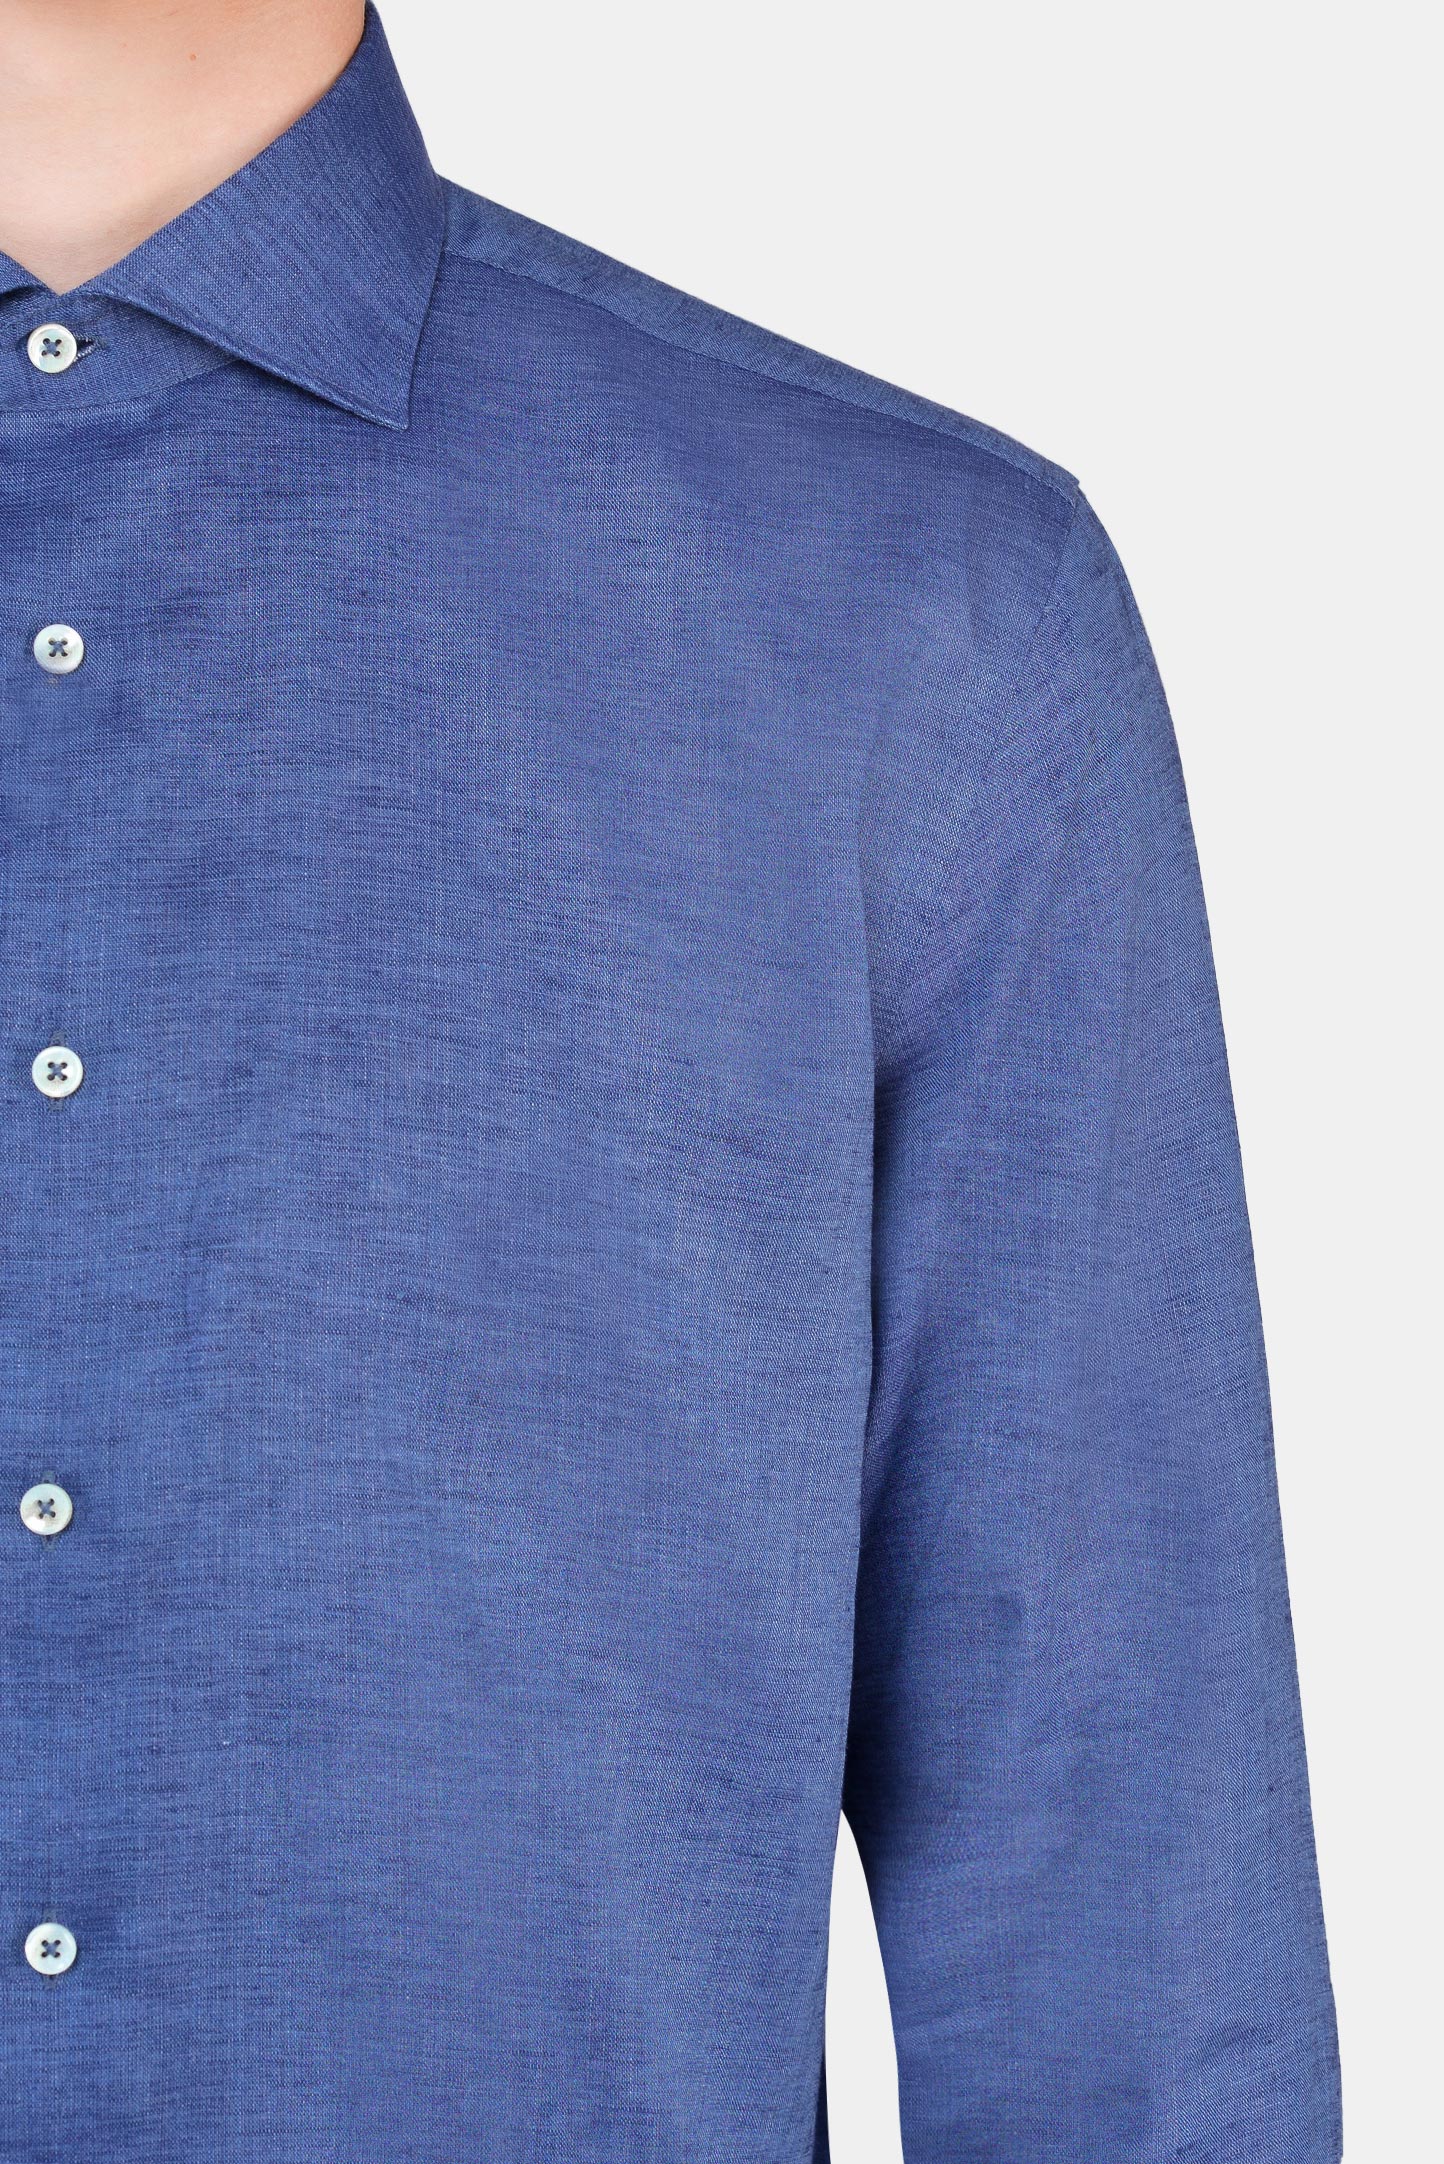 Рубашка CANALI GR01840/301, цвет: Синий, Мужской